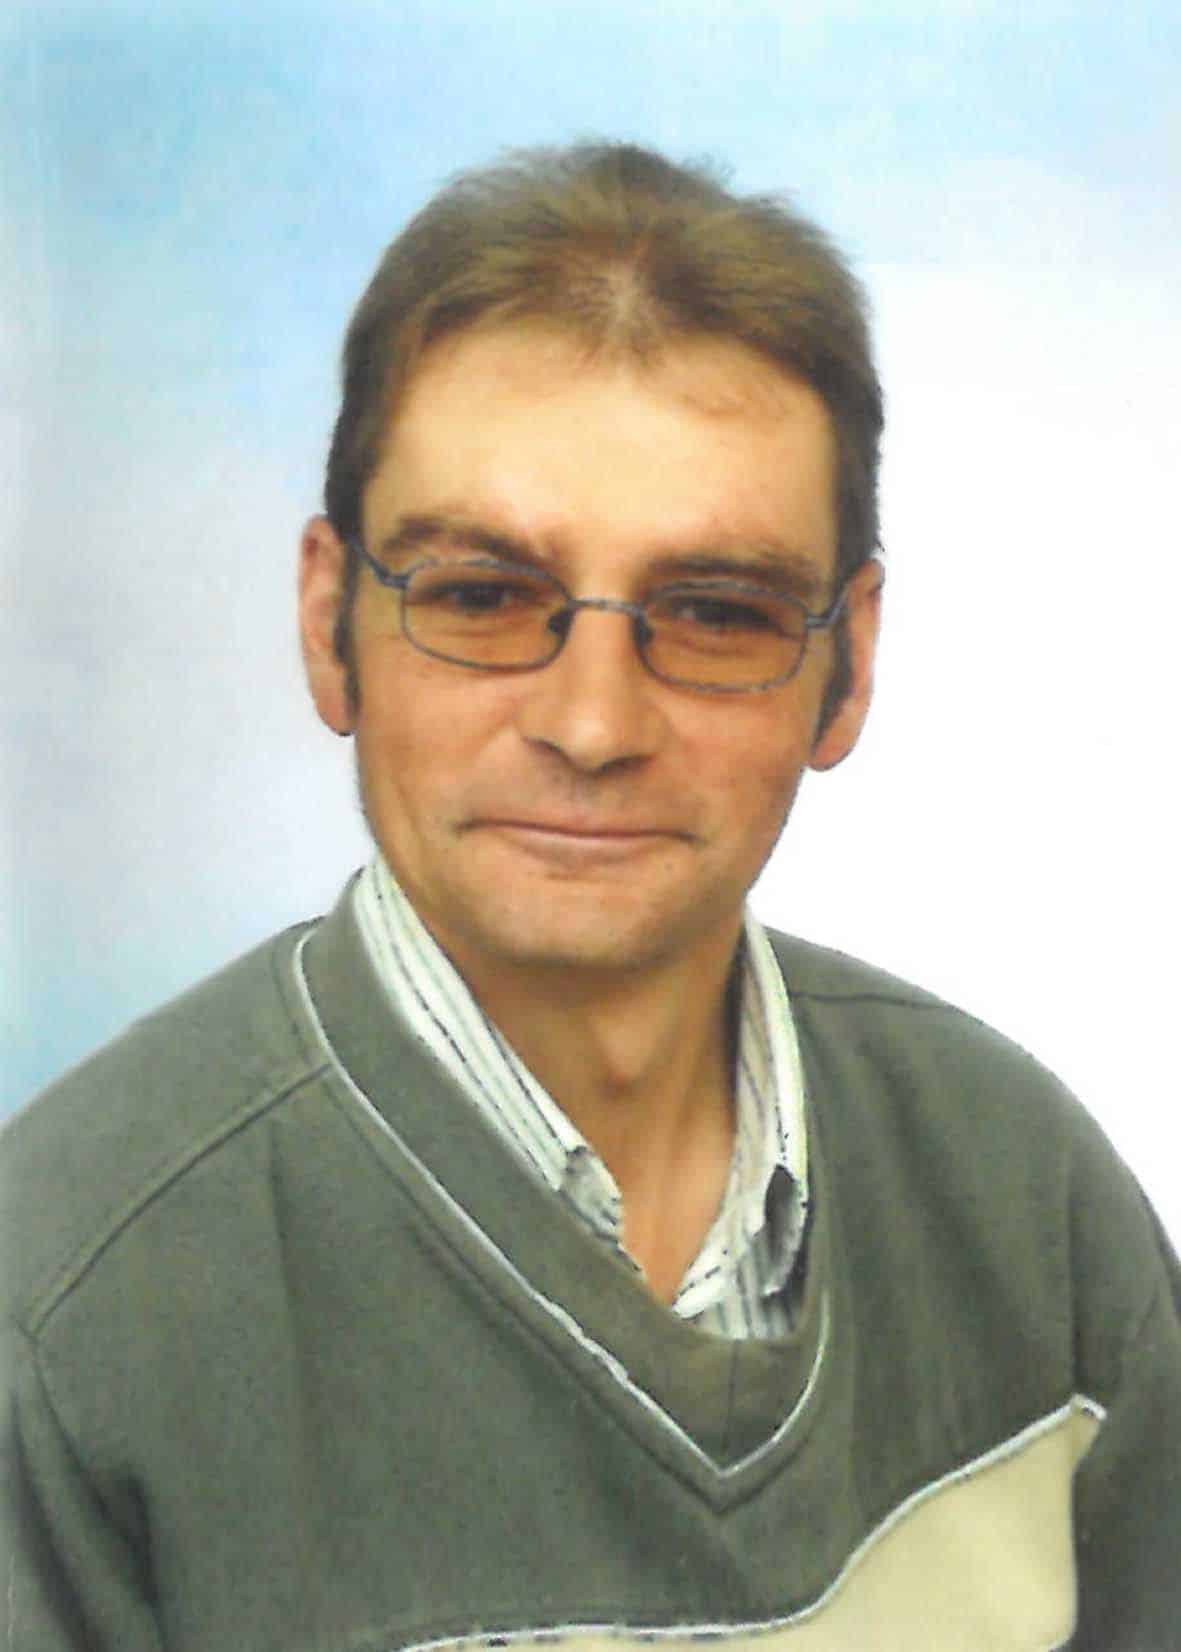 Wolfgang Stelzer (49)